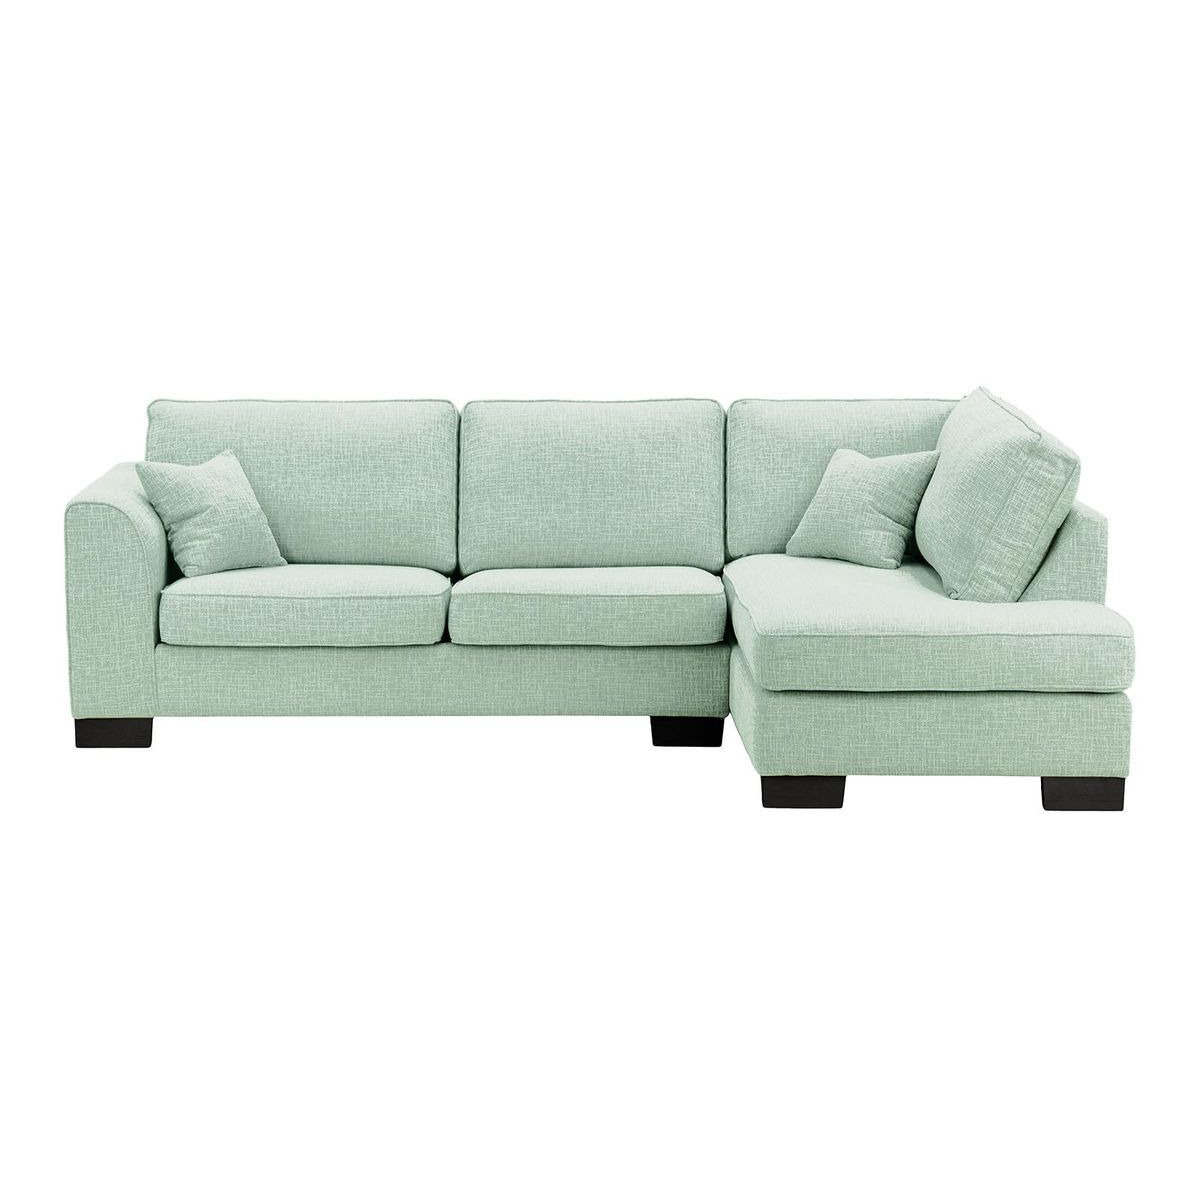 Avos Right Hand Corner Sofa Bed, celadon, Leg colour: black - image 1